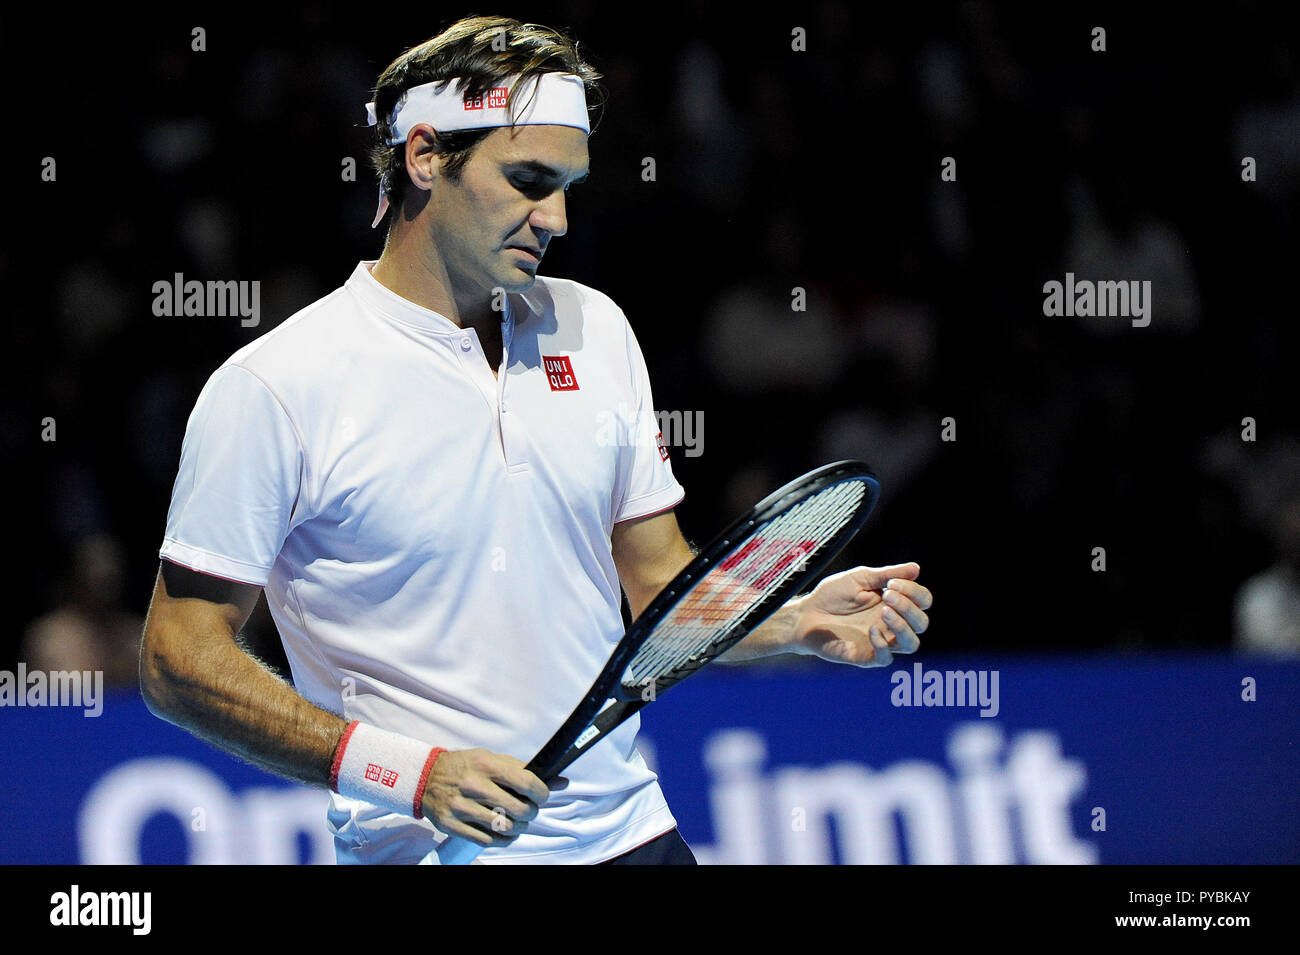 St Jakobshalle, Basel, Switzerland. 26th Oct, 2018. ATP World Tour, Swiss Indoor  Tennis; Roger Federer (SUI)